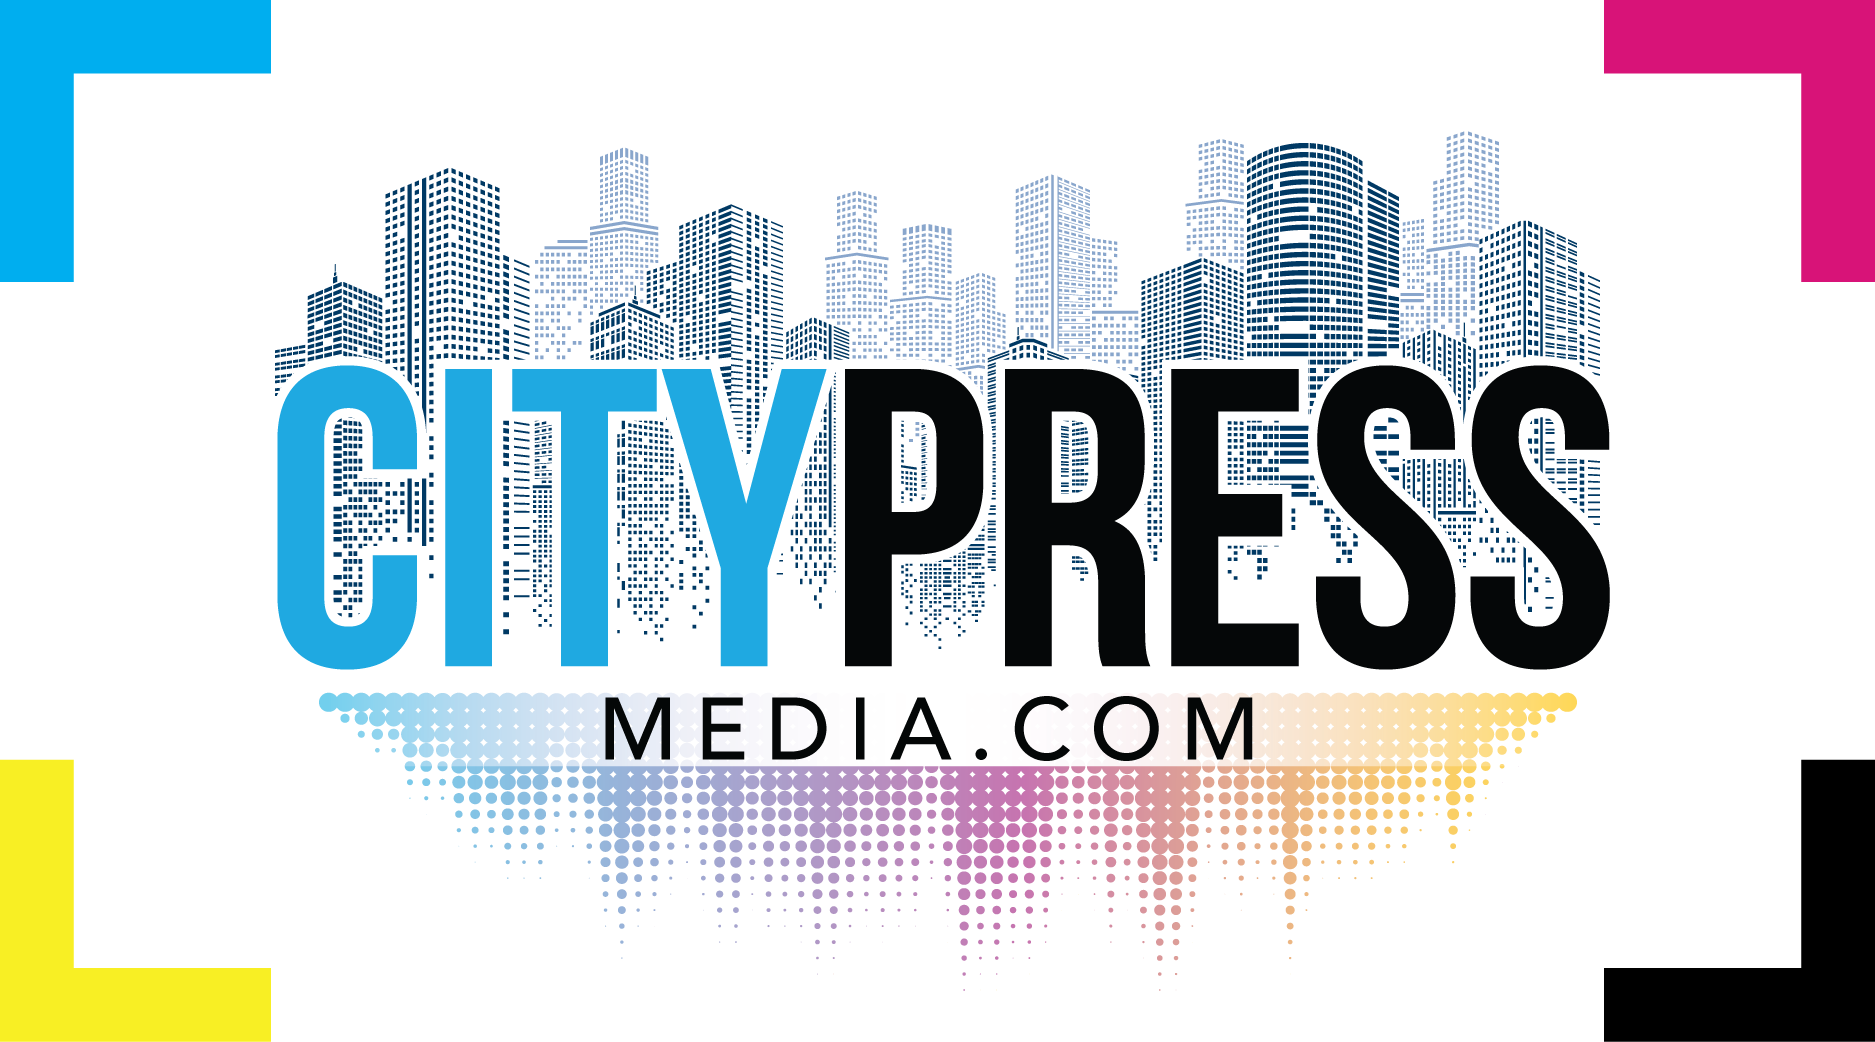 City Press Media